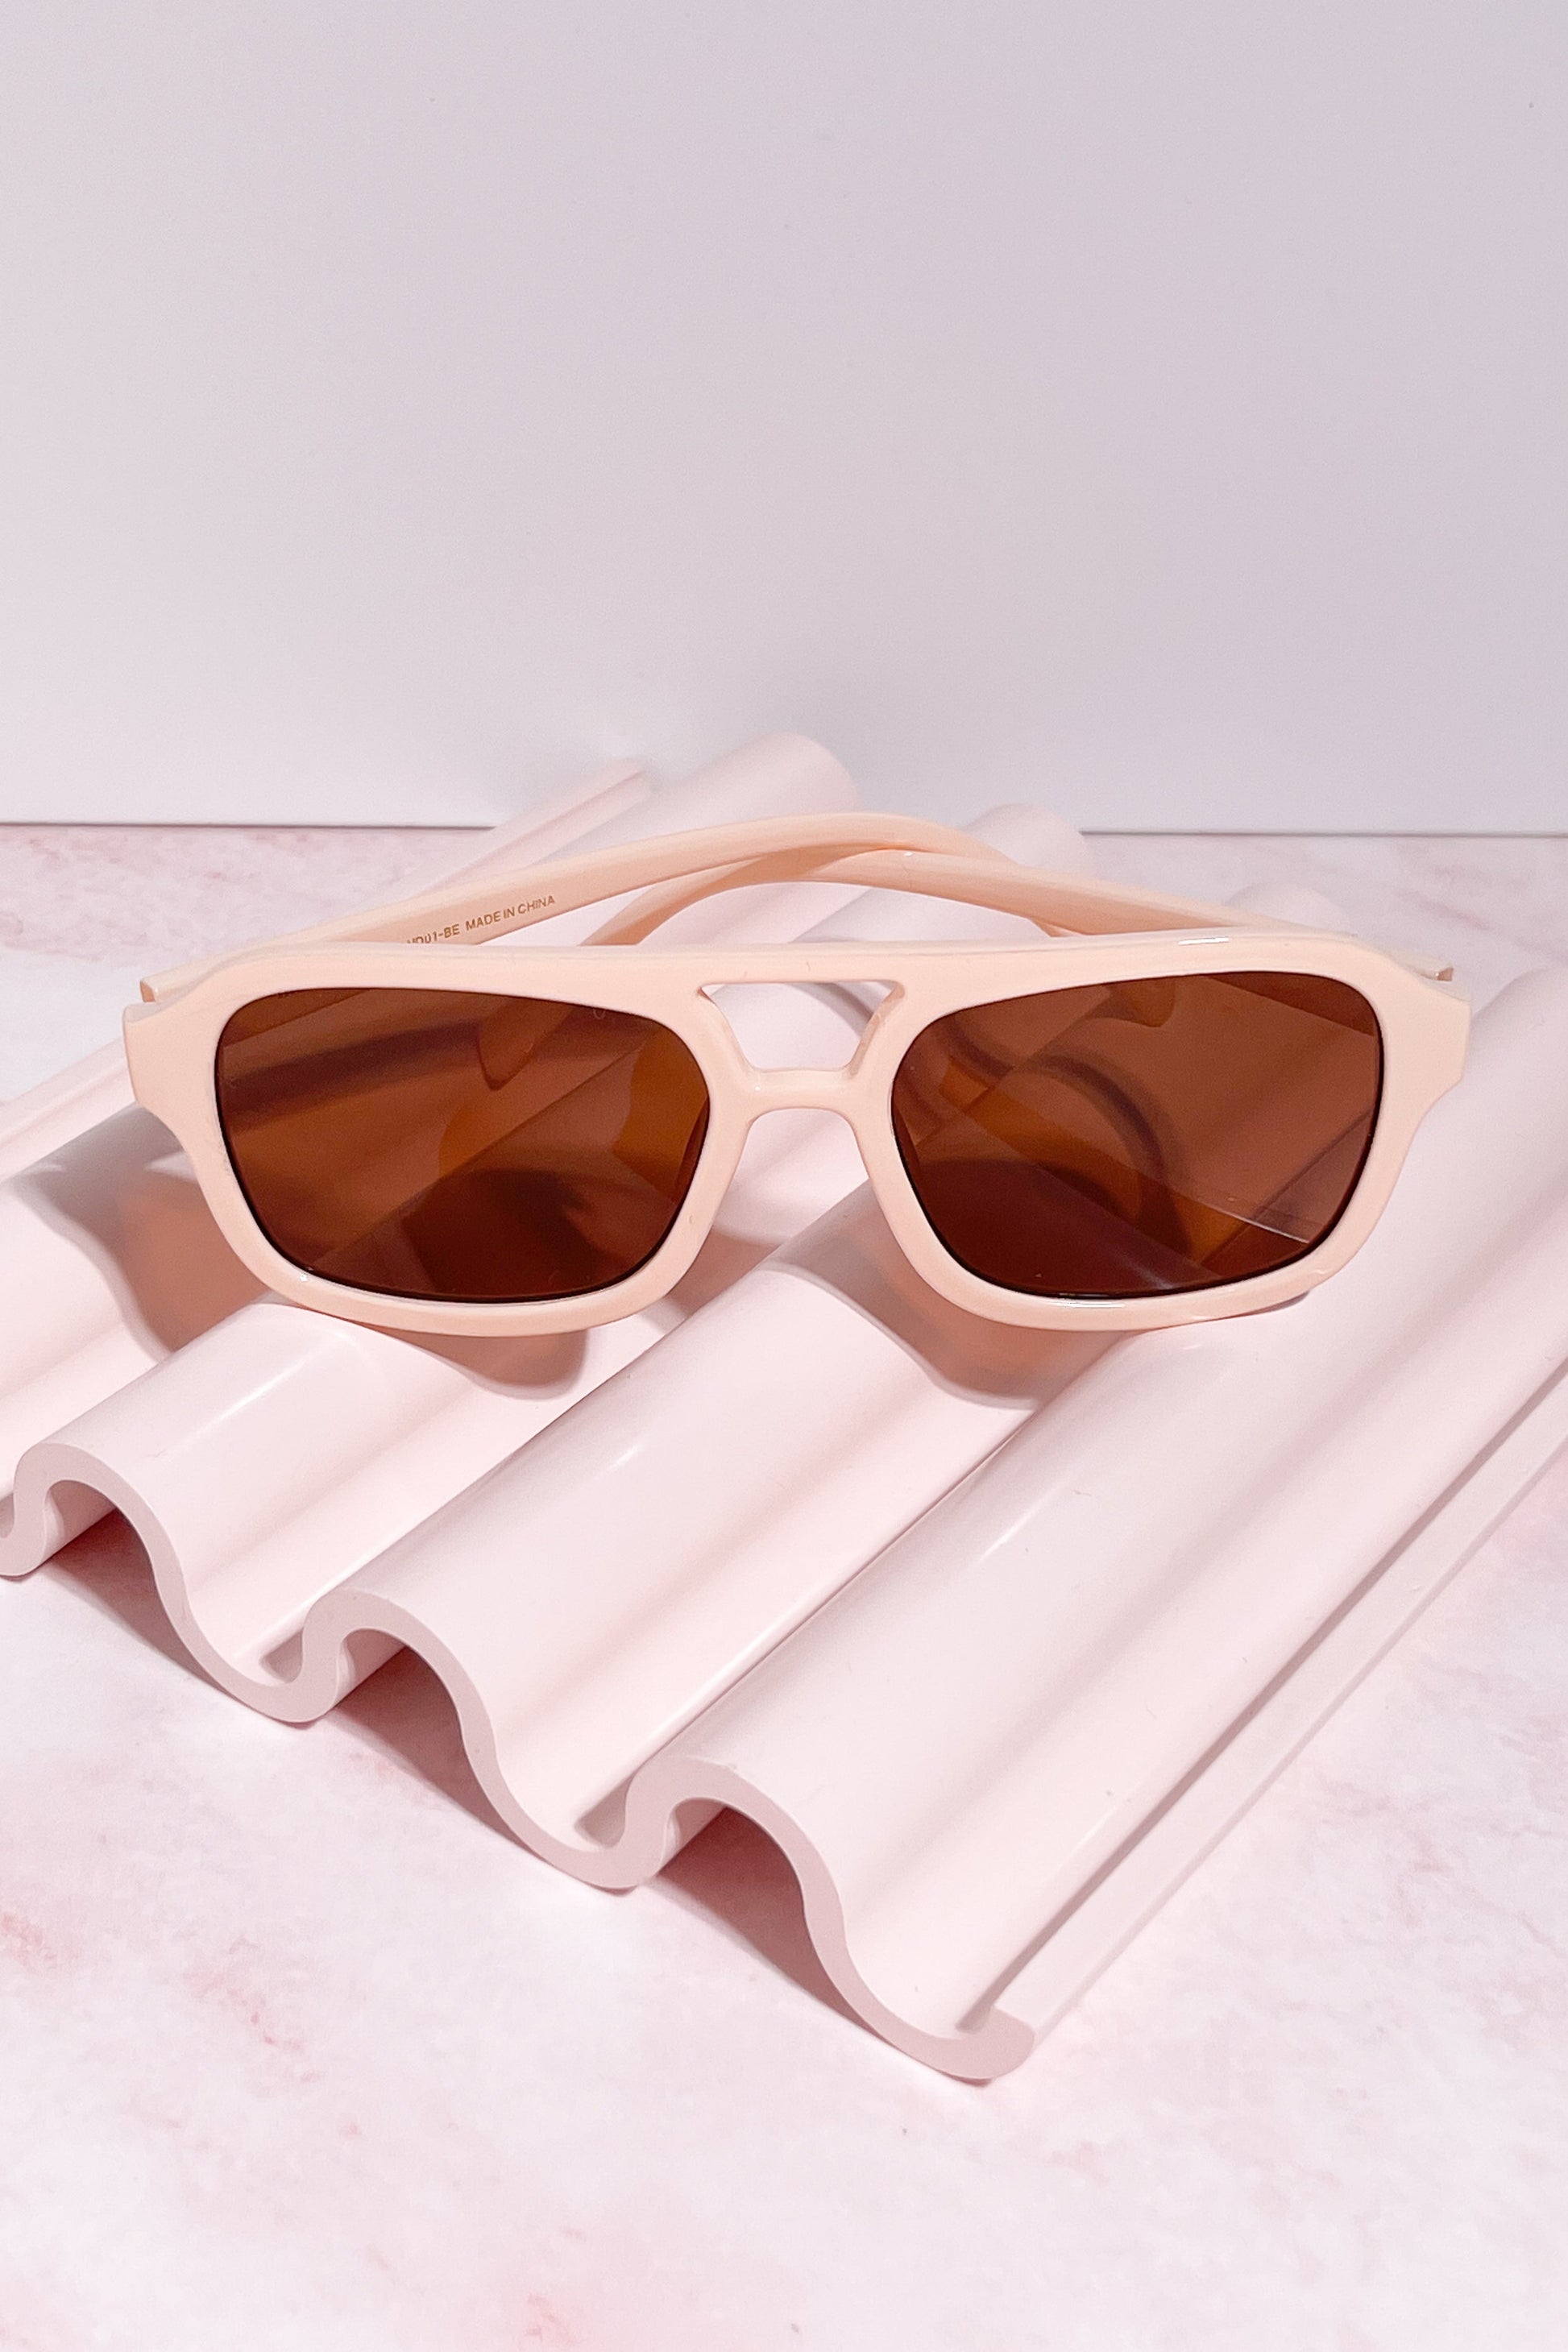 Sandbar Aviator Sunglasses Sunglasses Mulberry & Grand Beige with Brown Lens 